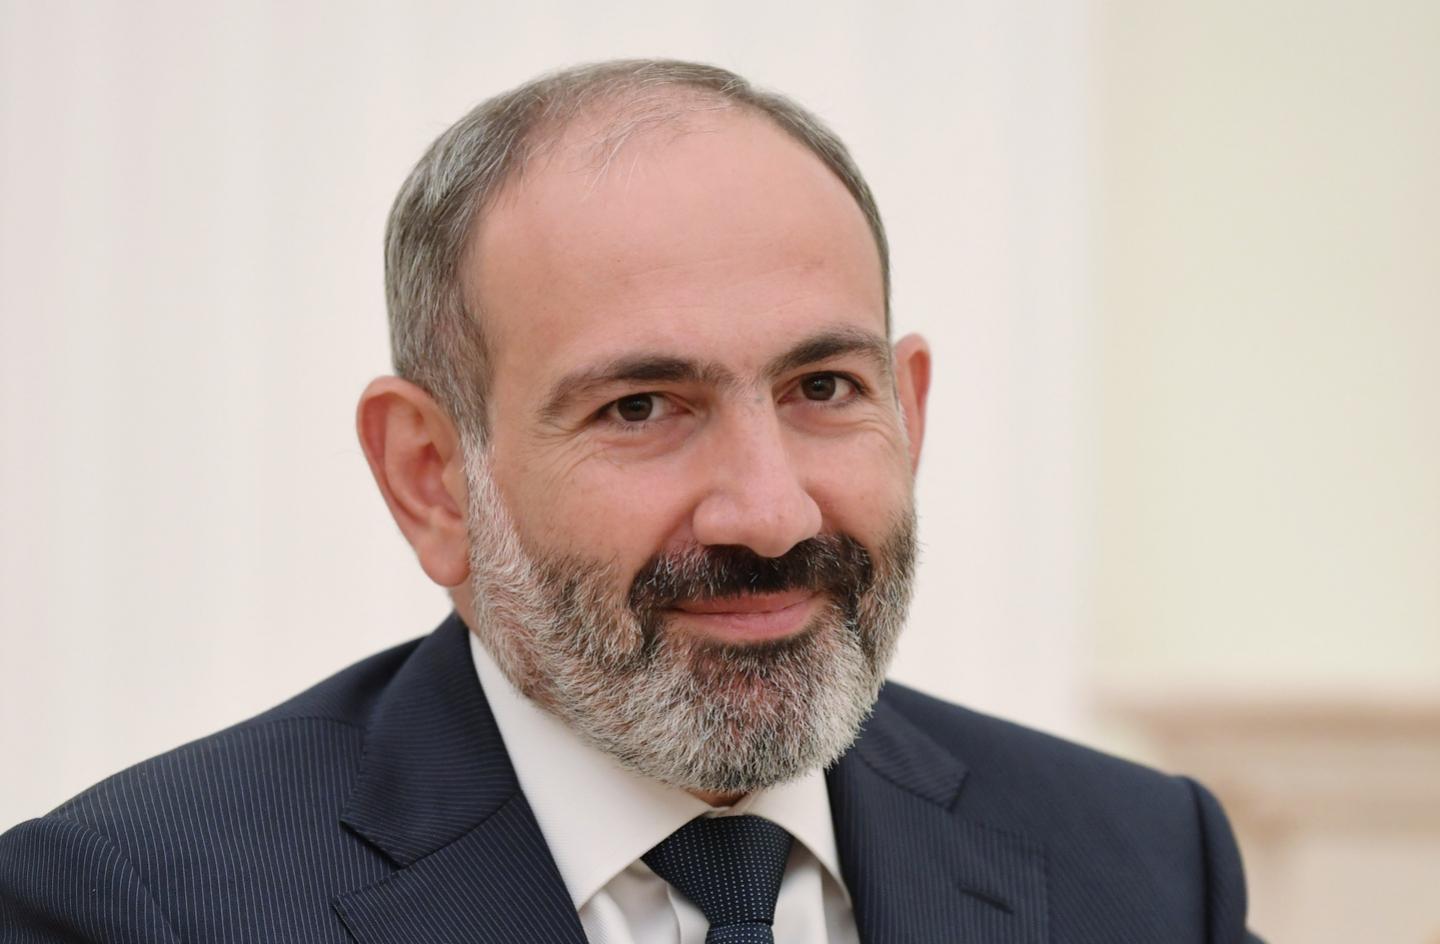 Pashinyan says to keep Armenia within set format of talks on Nagorno-Karabakh